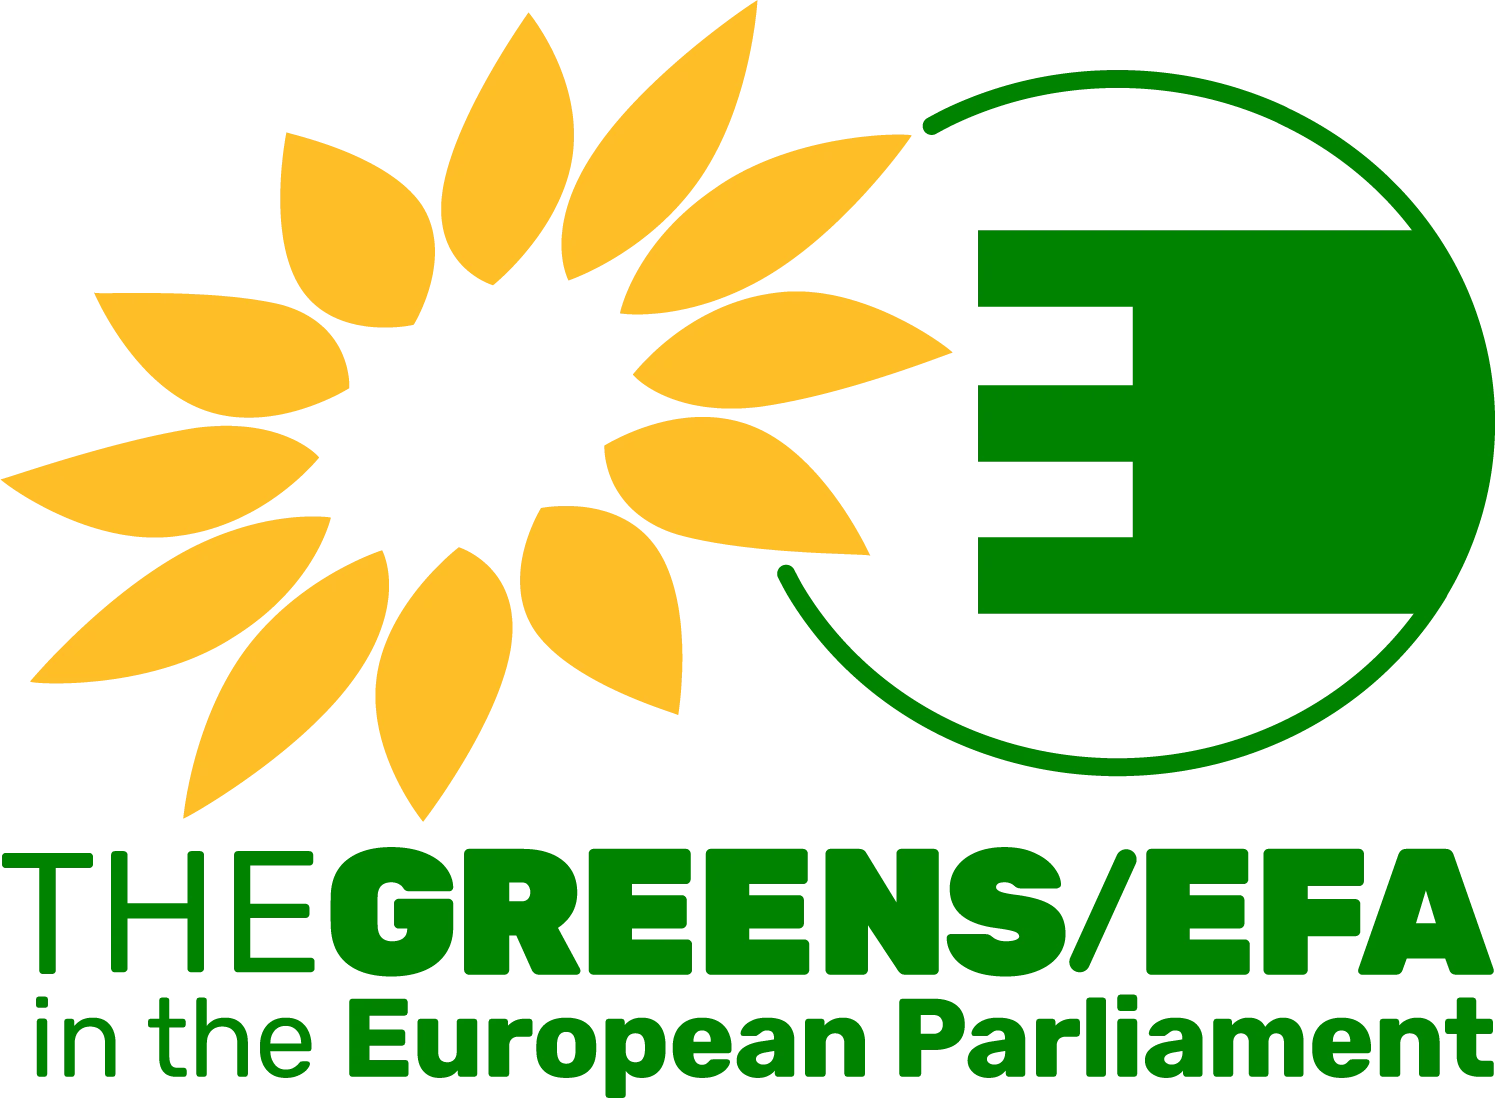 The Greens / EFA